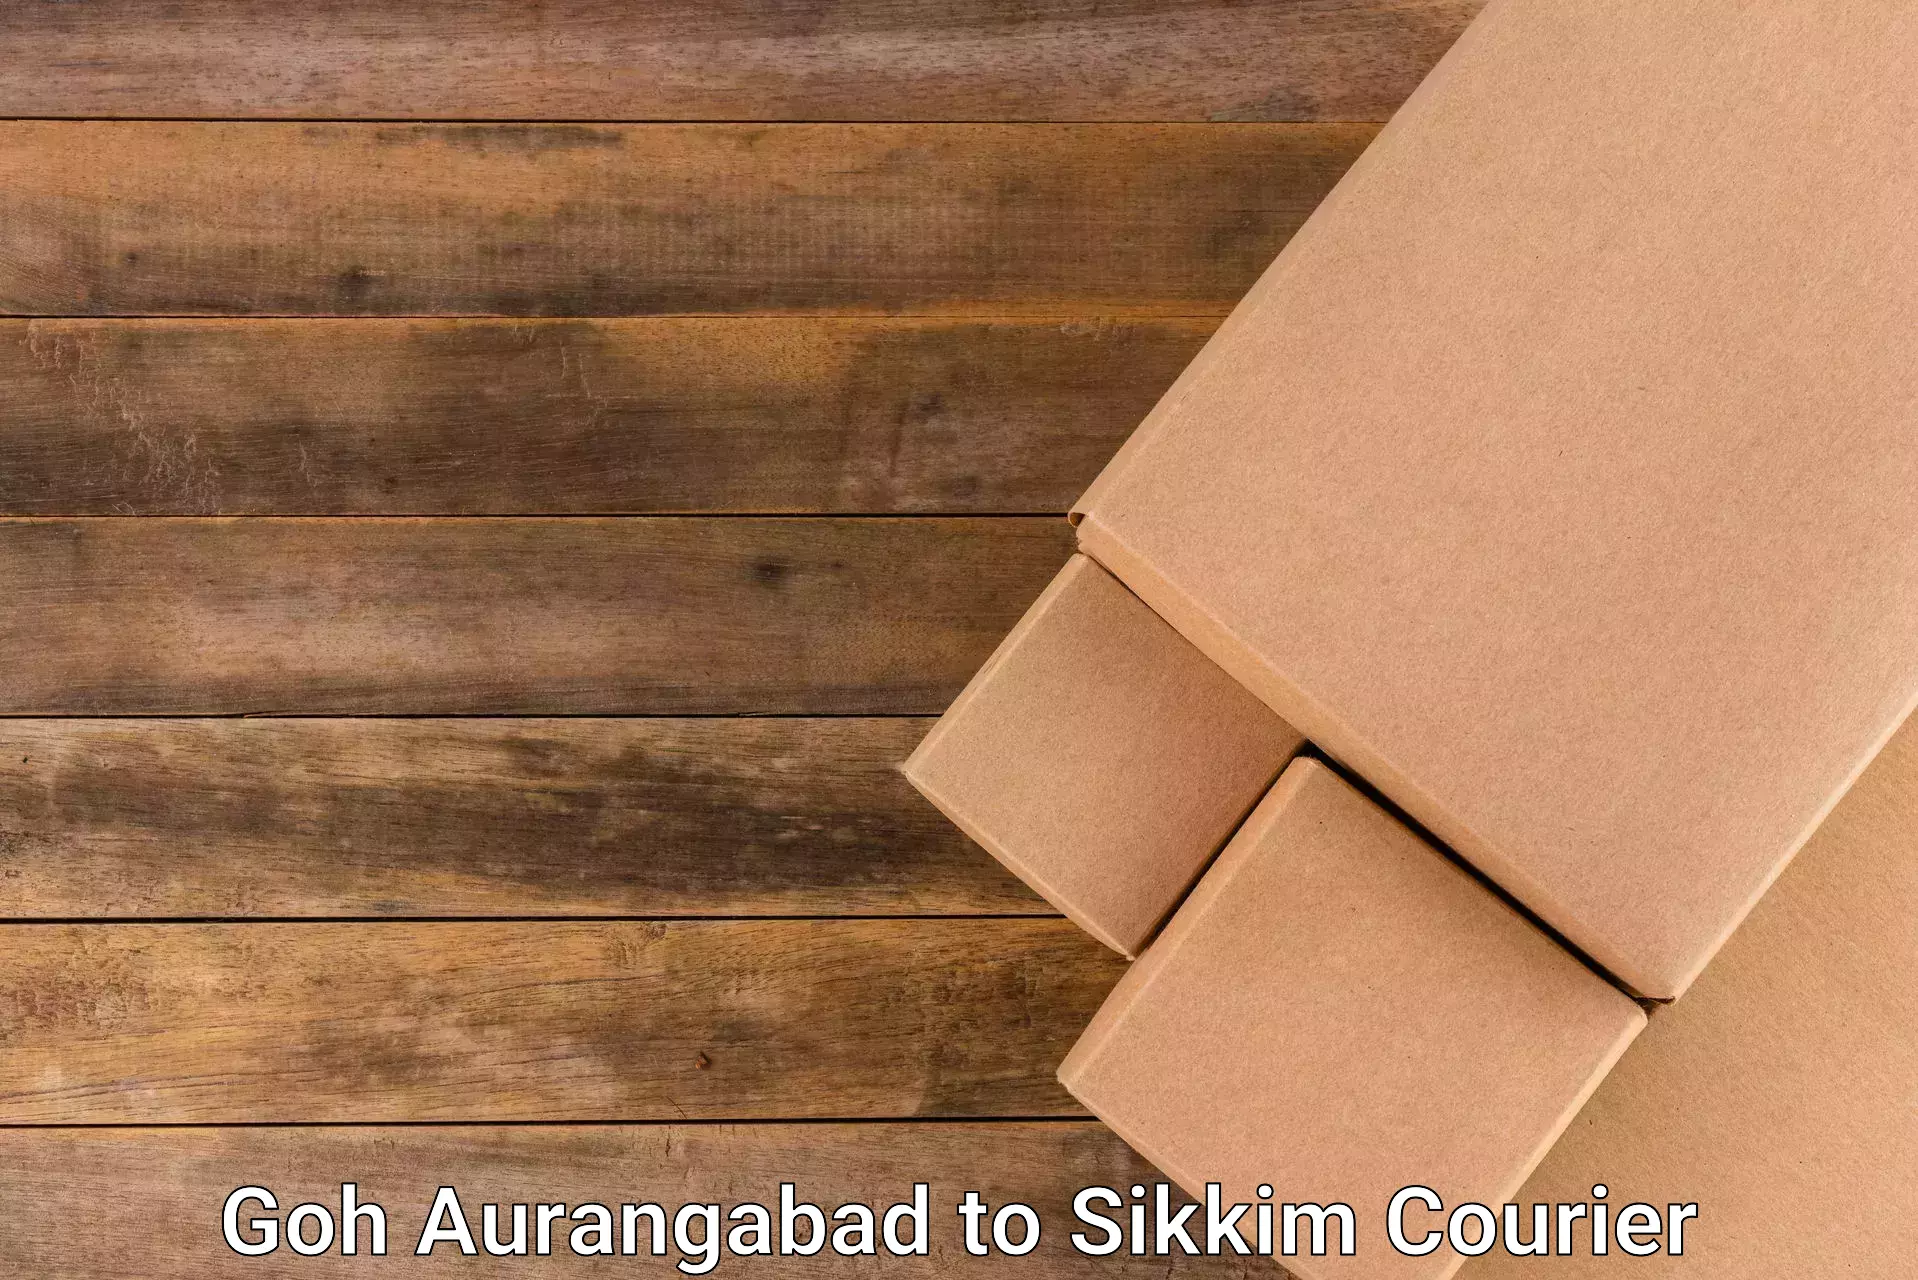 Urgent courier needs Goh Aurangabad to Rangpo